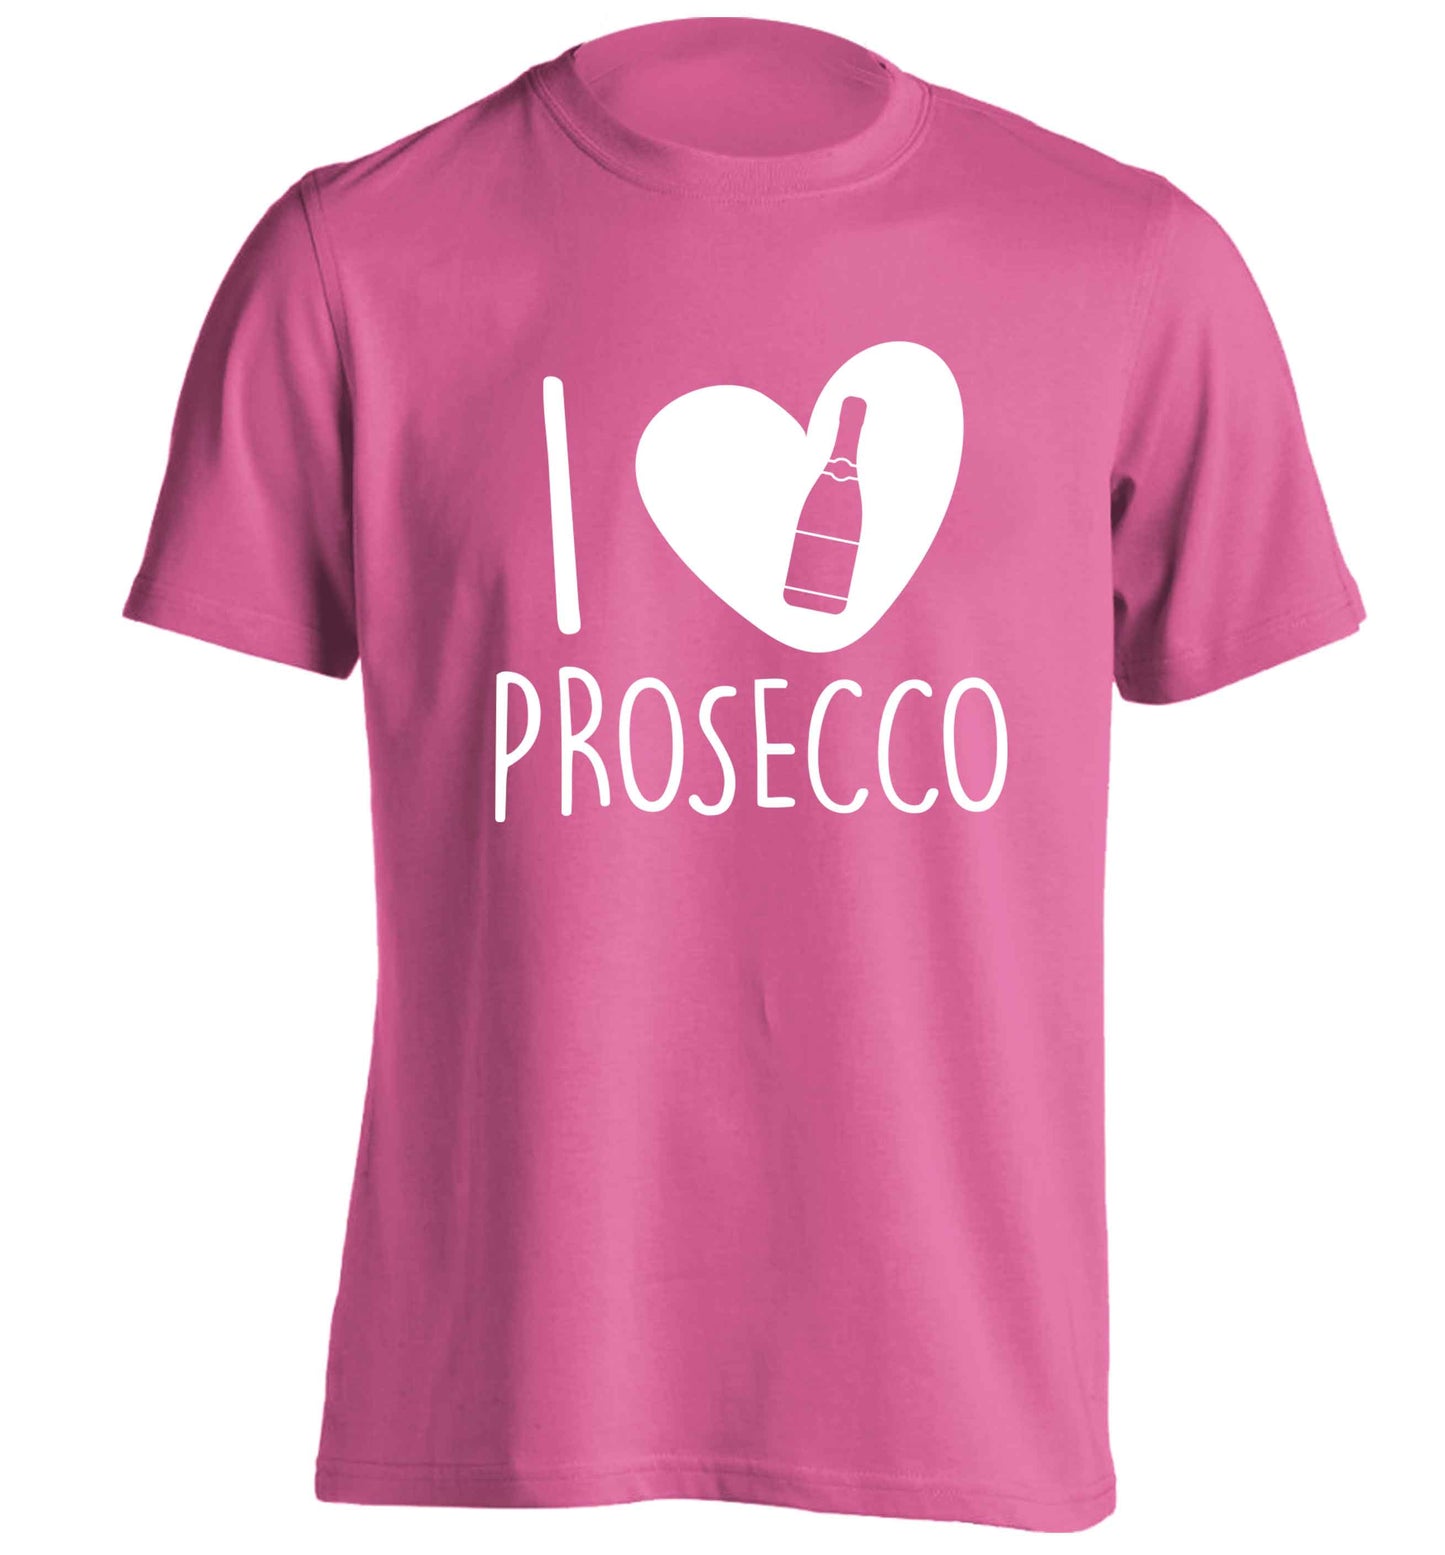 I love prosecco adults unisex pink Tshirt 2XL